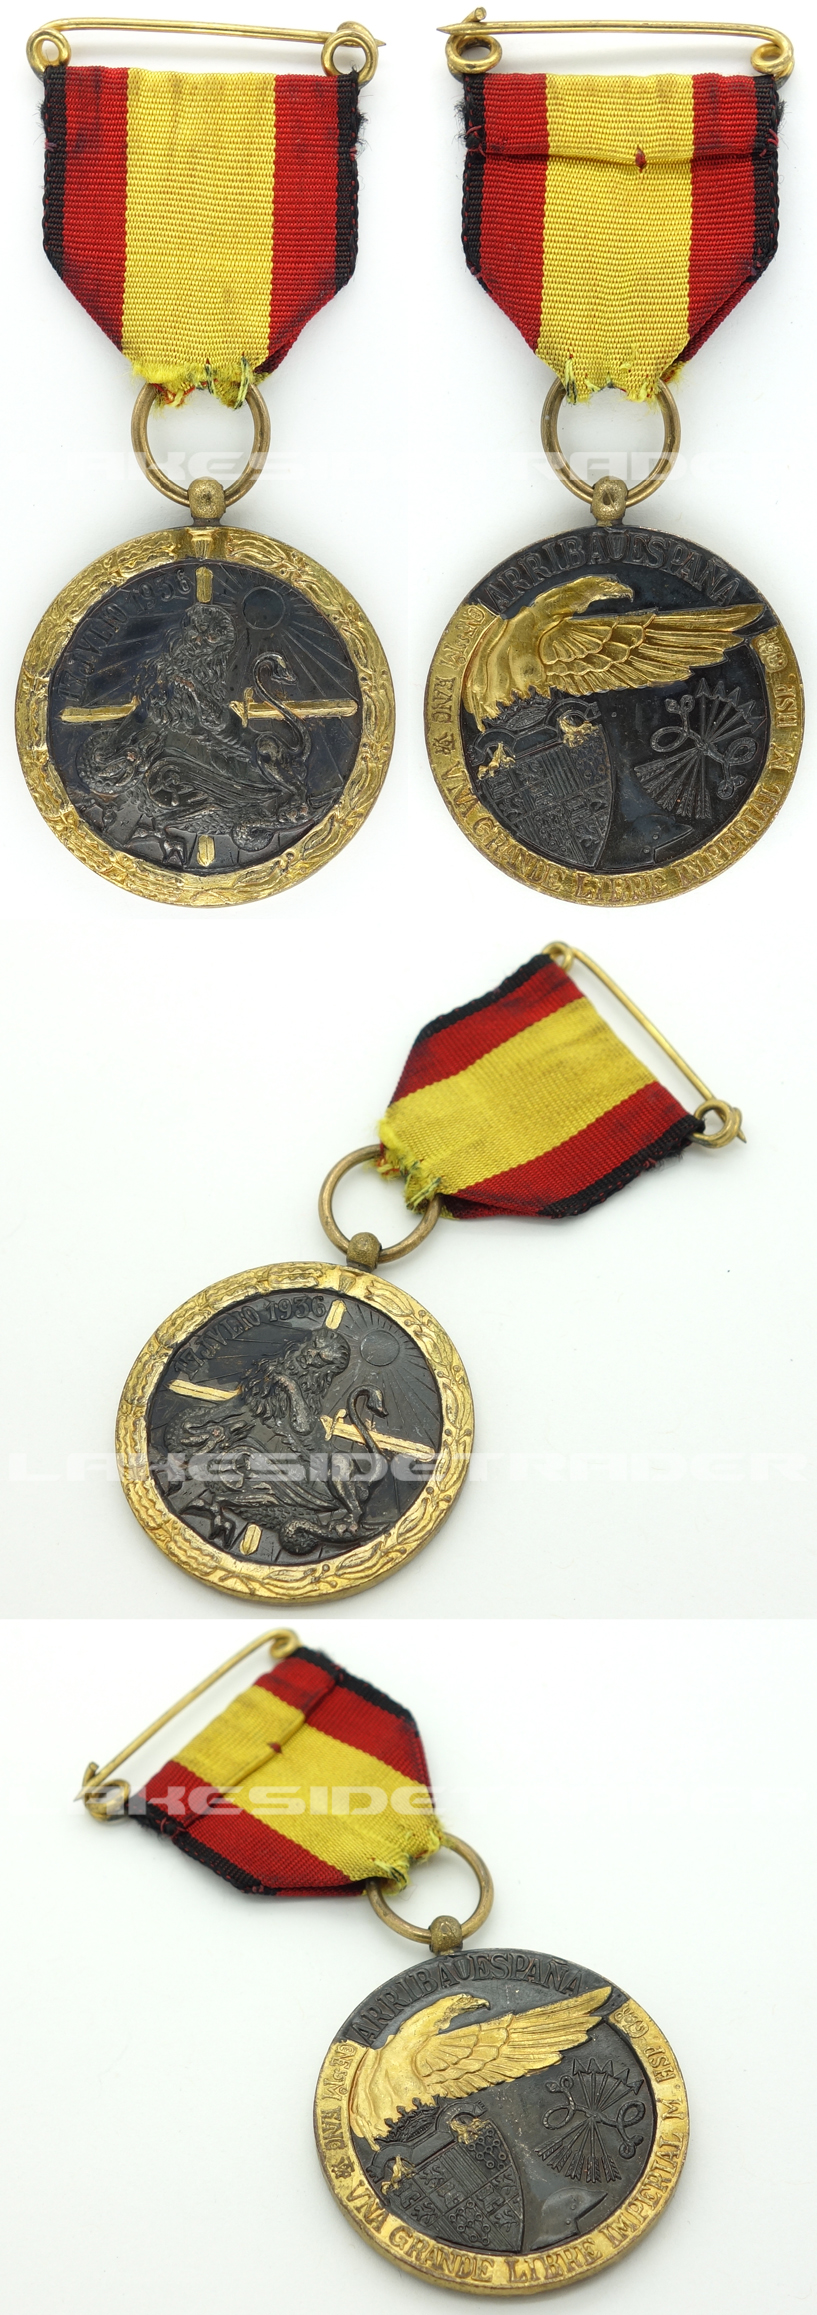 Spanish Civil War Campaign Medal 1936-1939